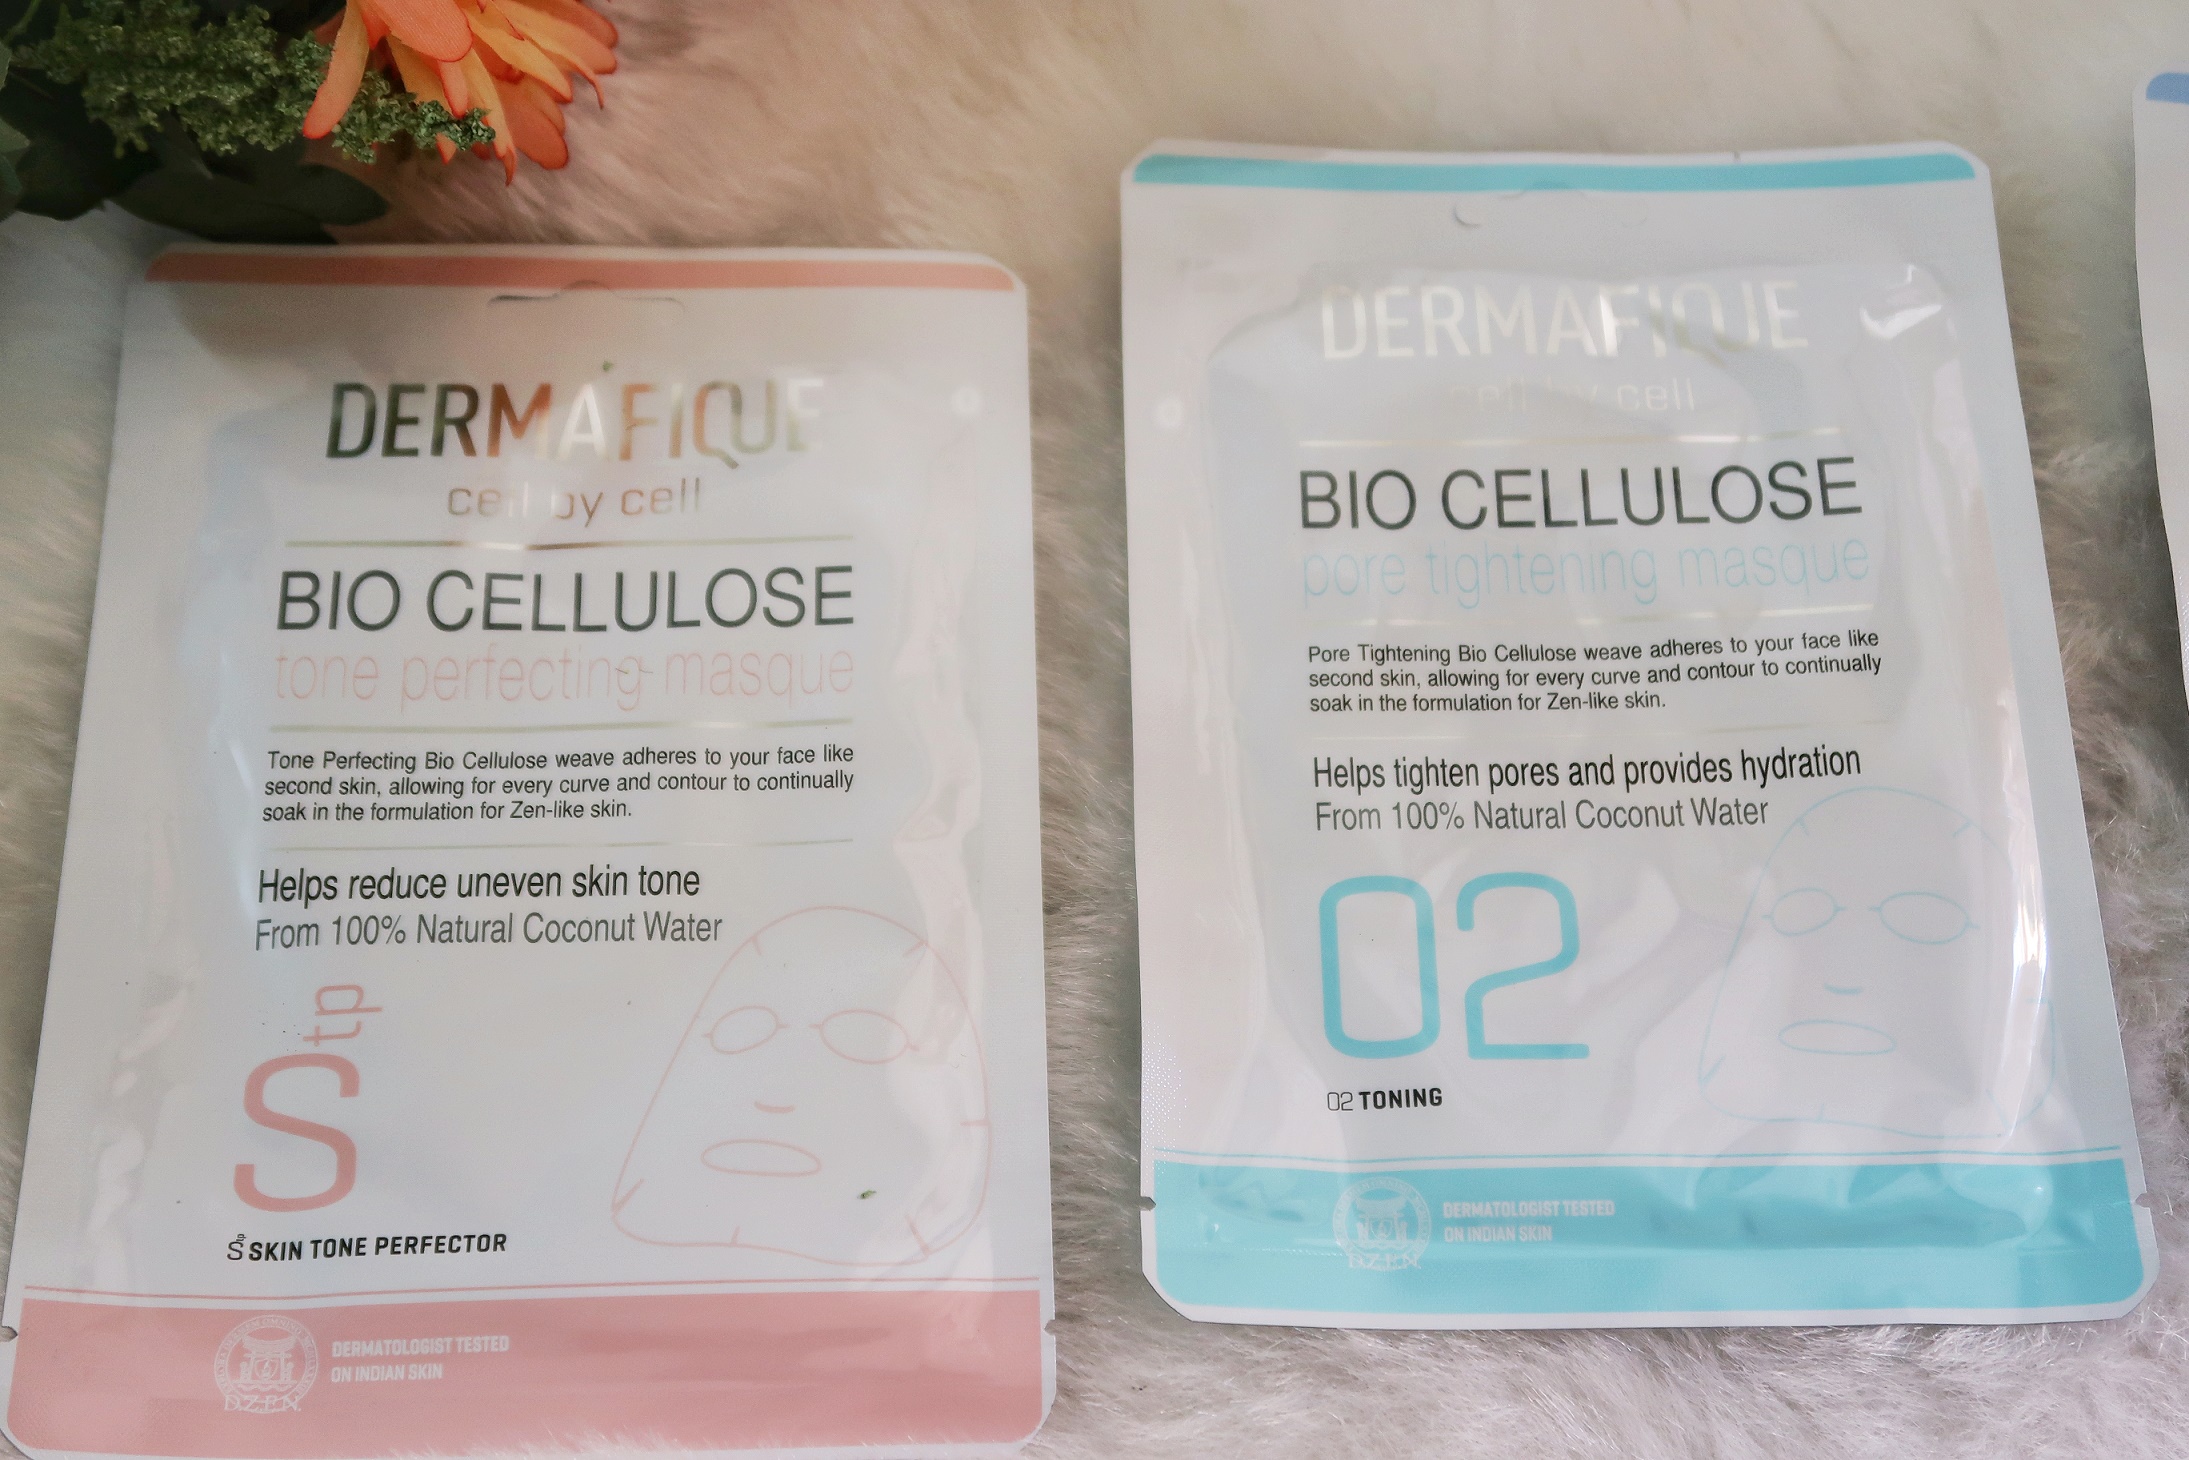 Dermafique Bio Cellulose Face Masque Review